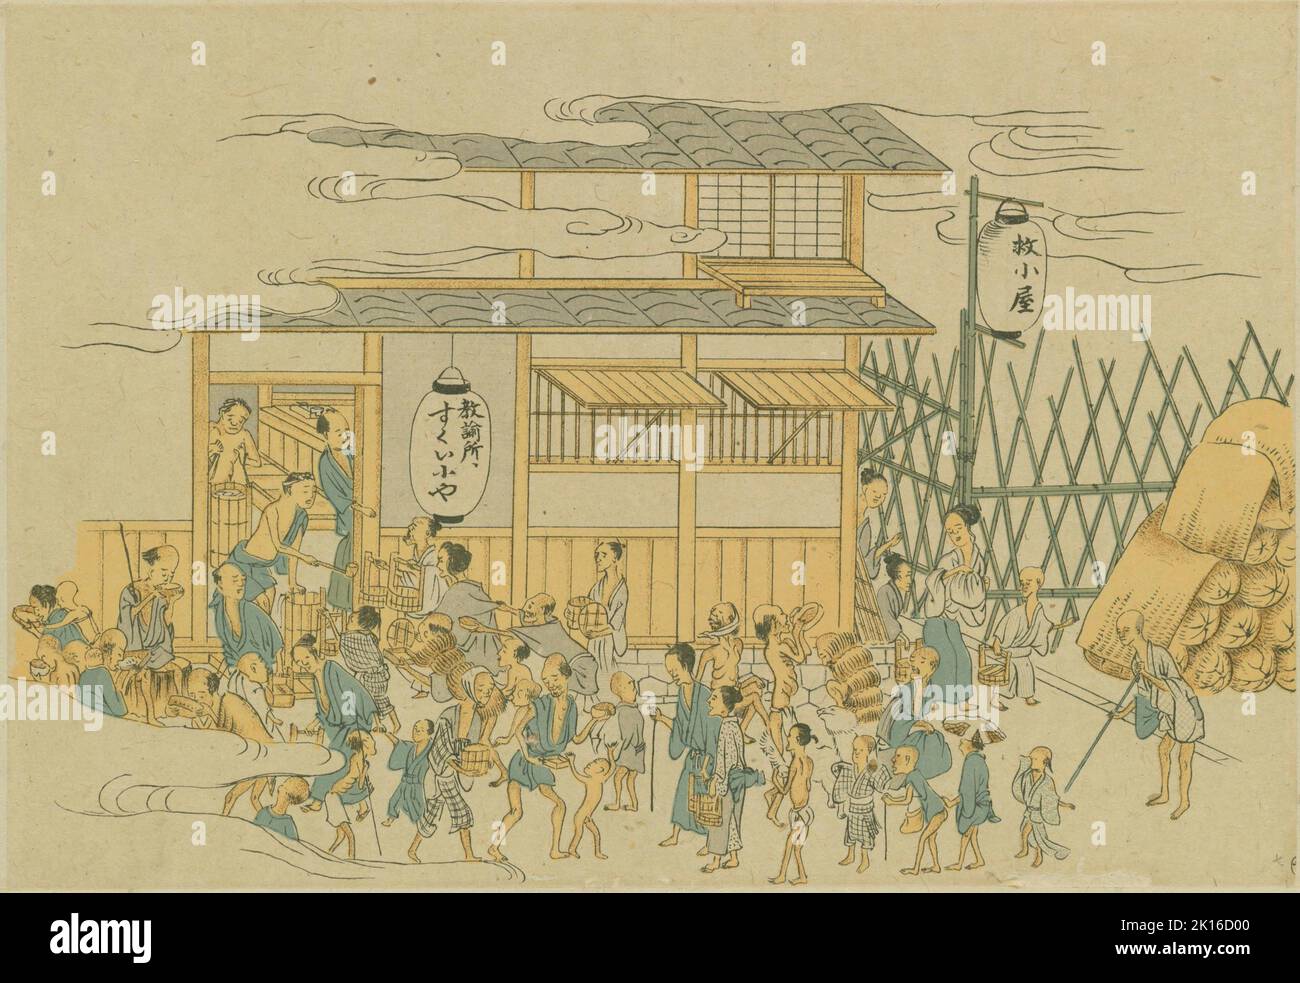 Illustration of rescue hut during Tenpō famine, from Kōsai ryūmin kyūjutsuzu, Publish Date 1838, Artist Watanabe Kazan (1793-1841) Stock Photo